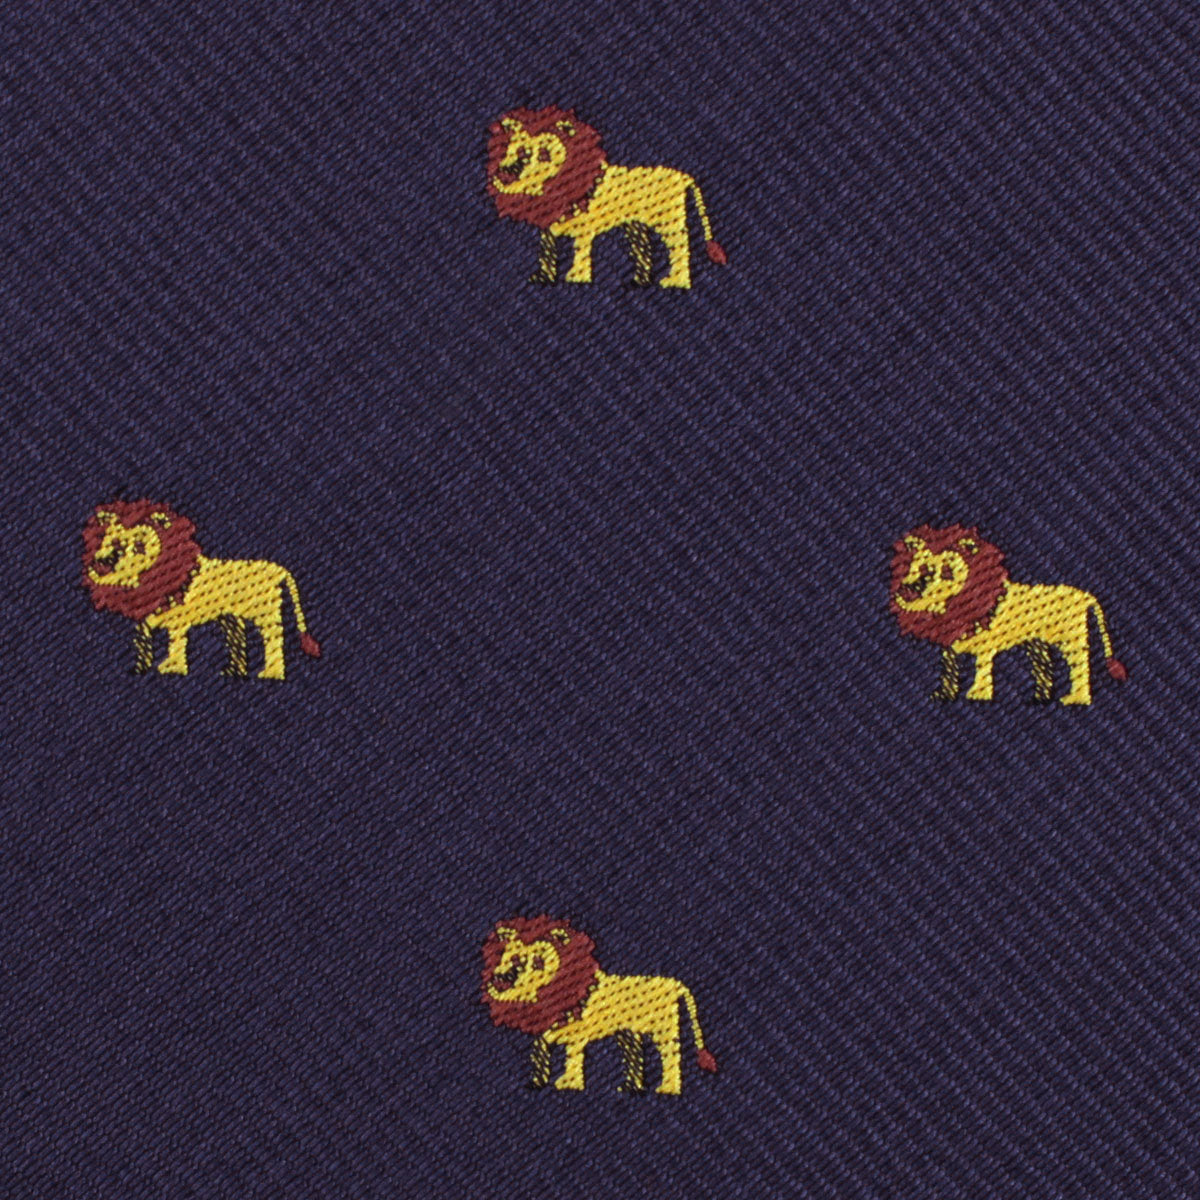 African Lion Fabric Mens Diamond Bowtie